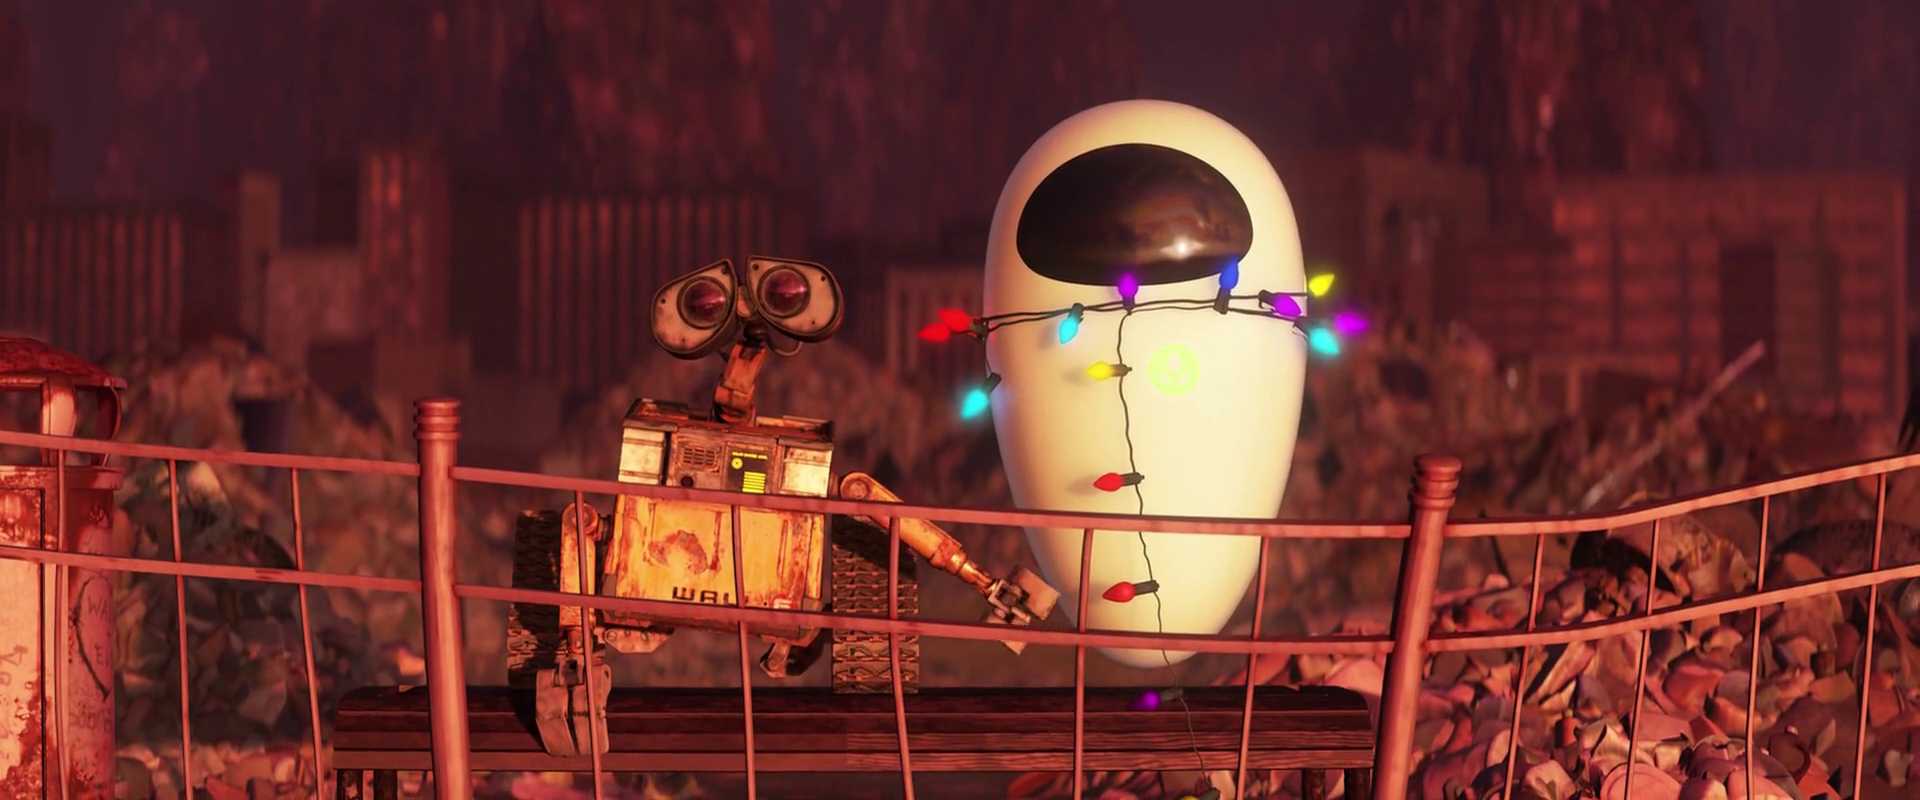 WALL-E snapshot 3